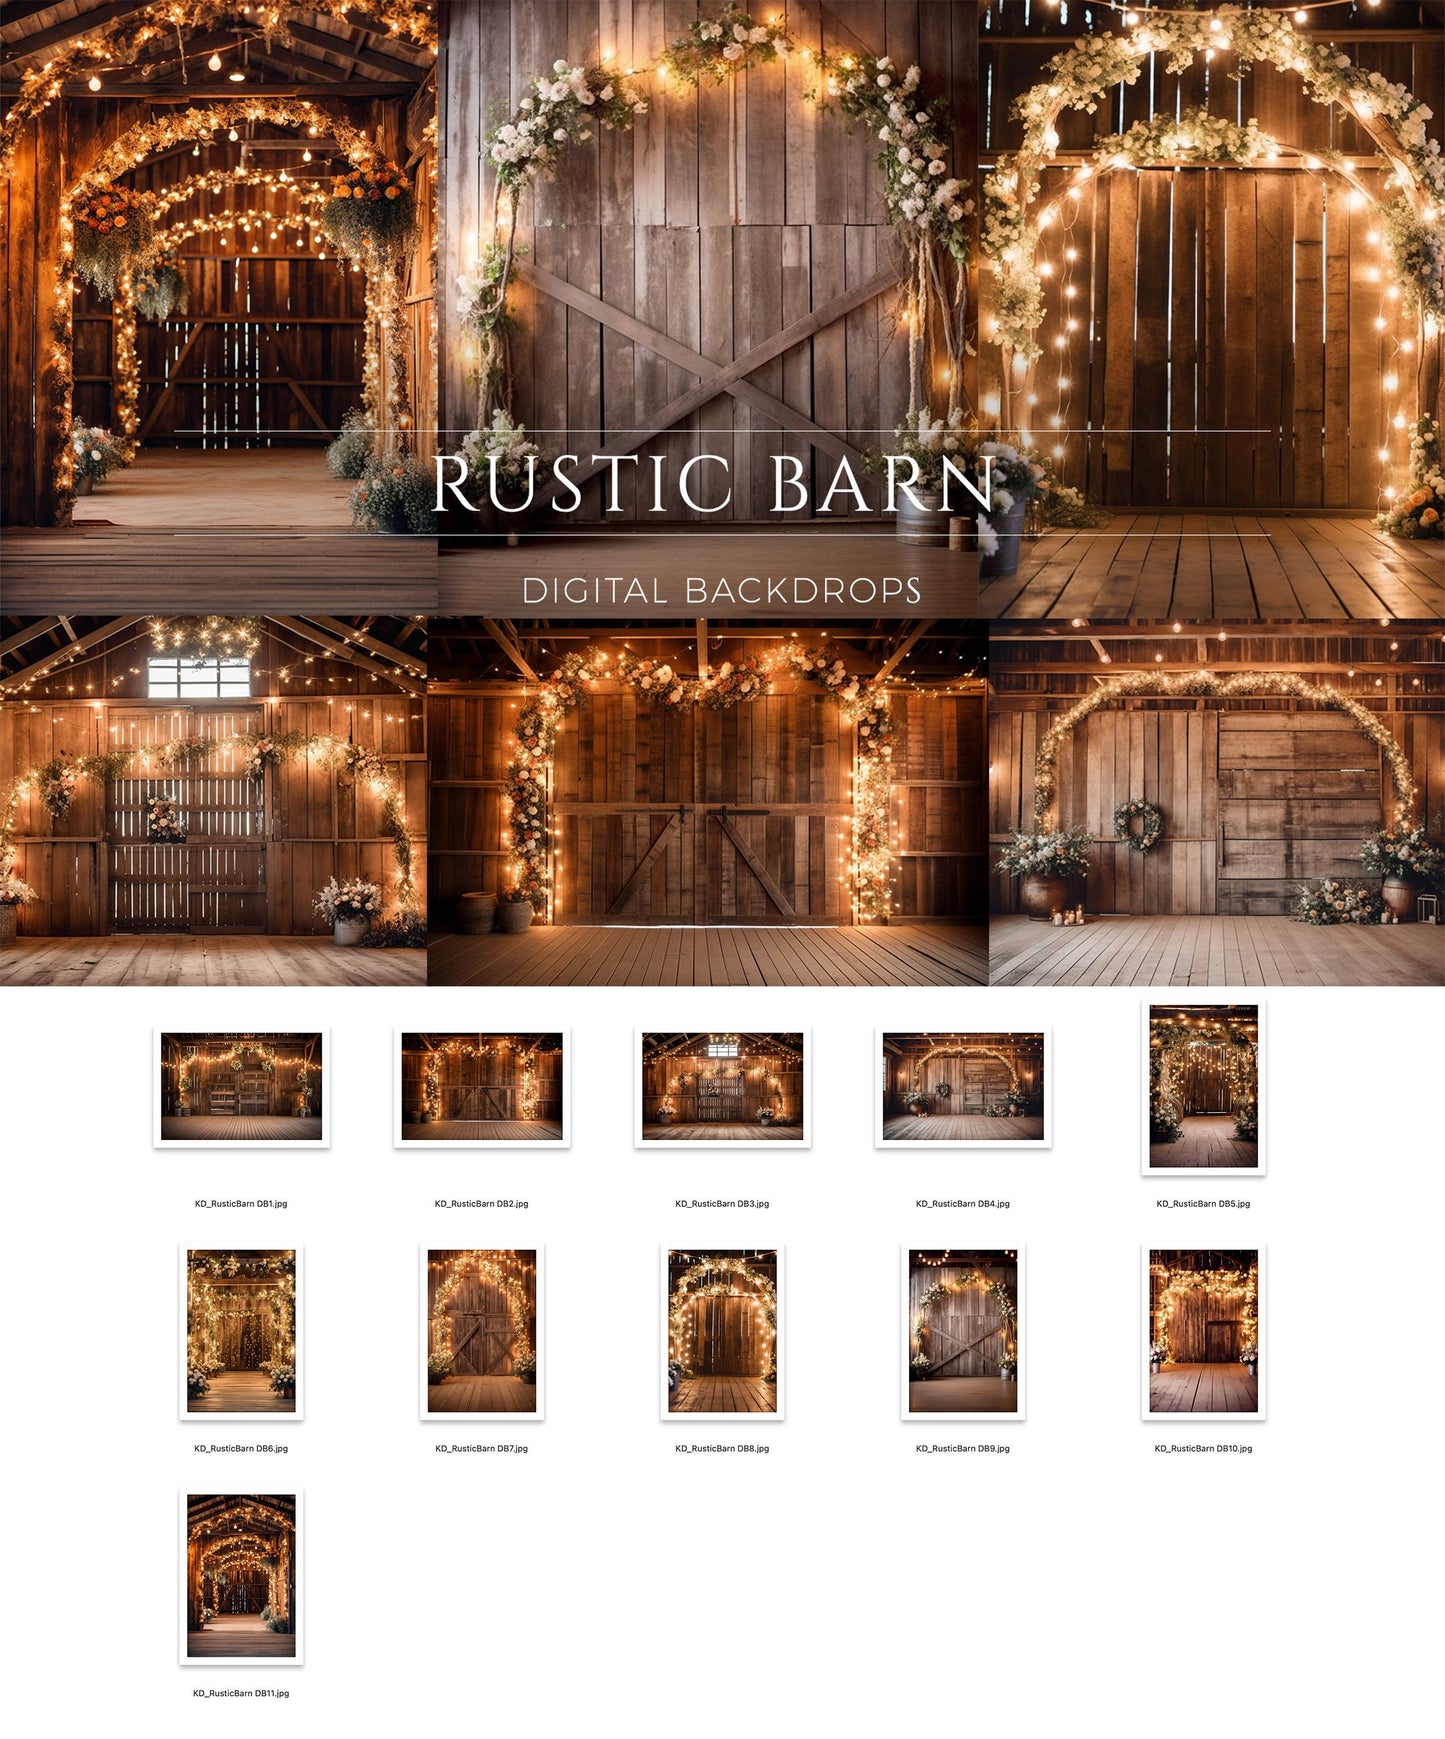 Rustic Barn Digital Backdrops